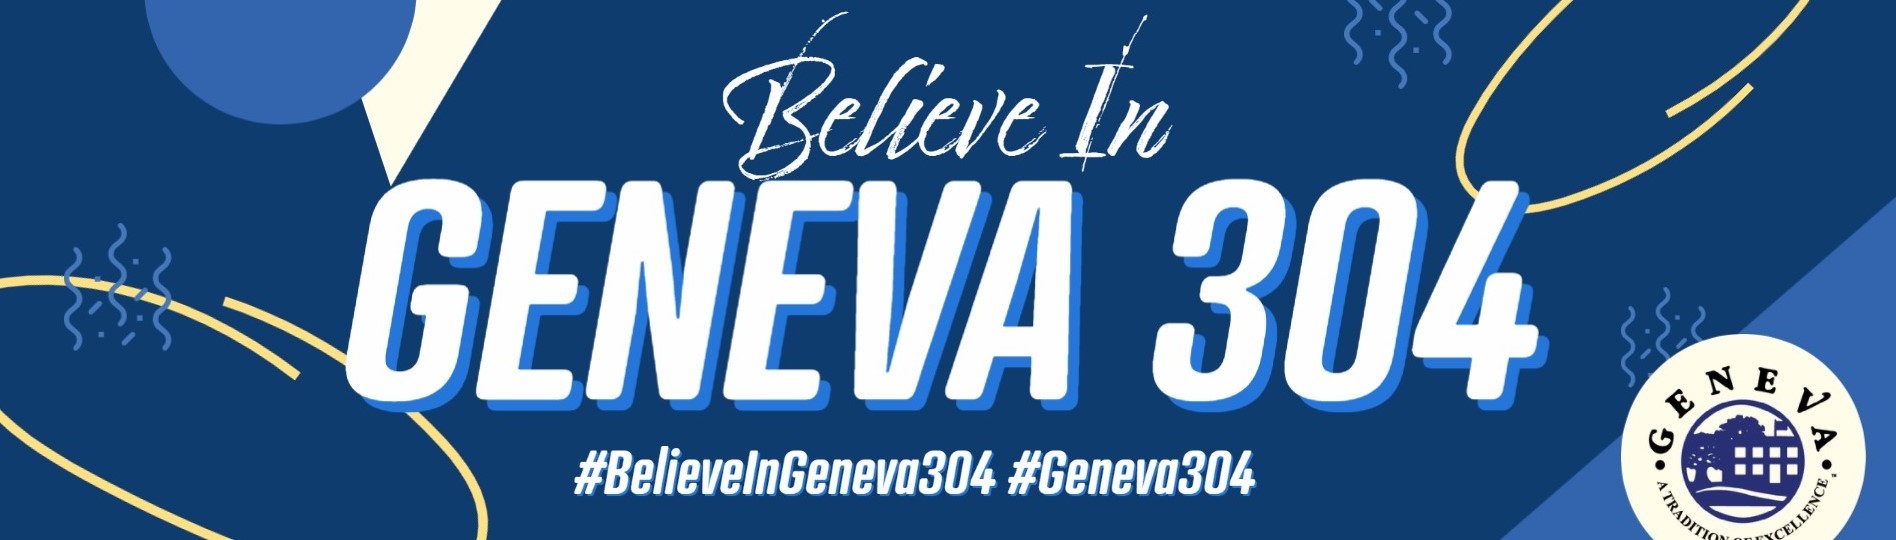 Believe in Geneva304